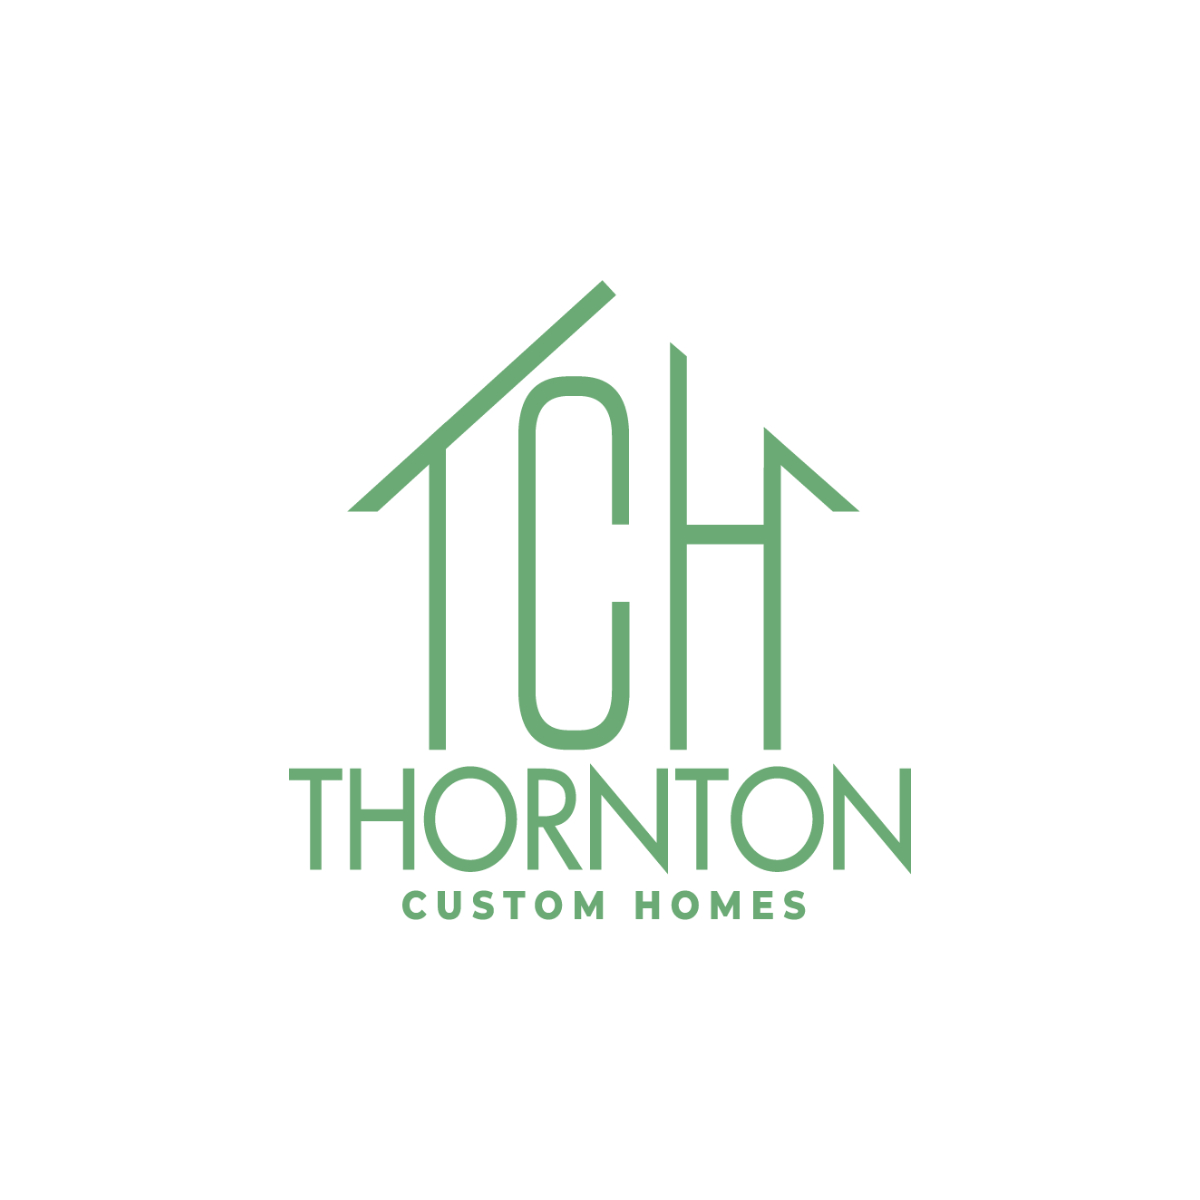 Thornton Custom Homes